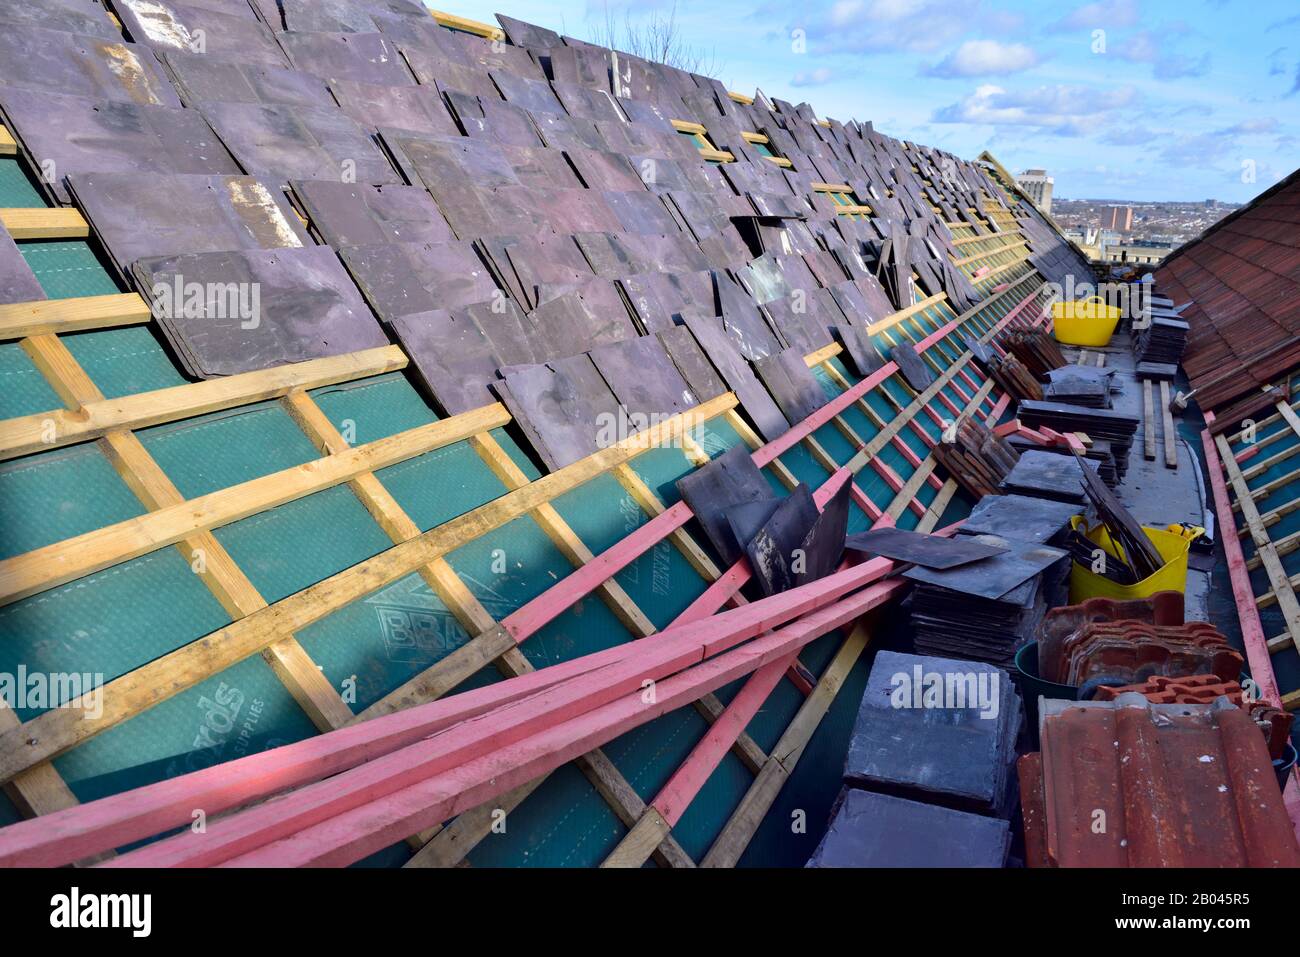 Slate roof being rebuilt being rebuilt during building refurbishment, England, UK Stock Photo